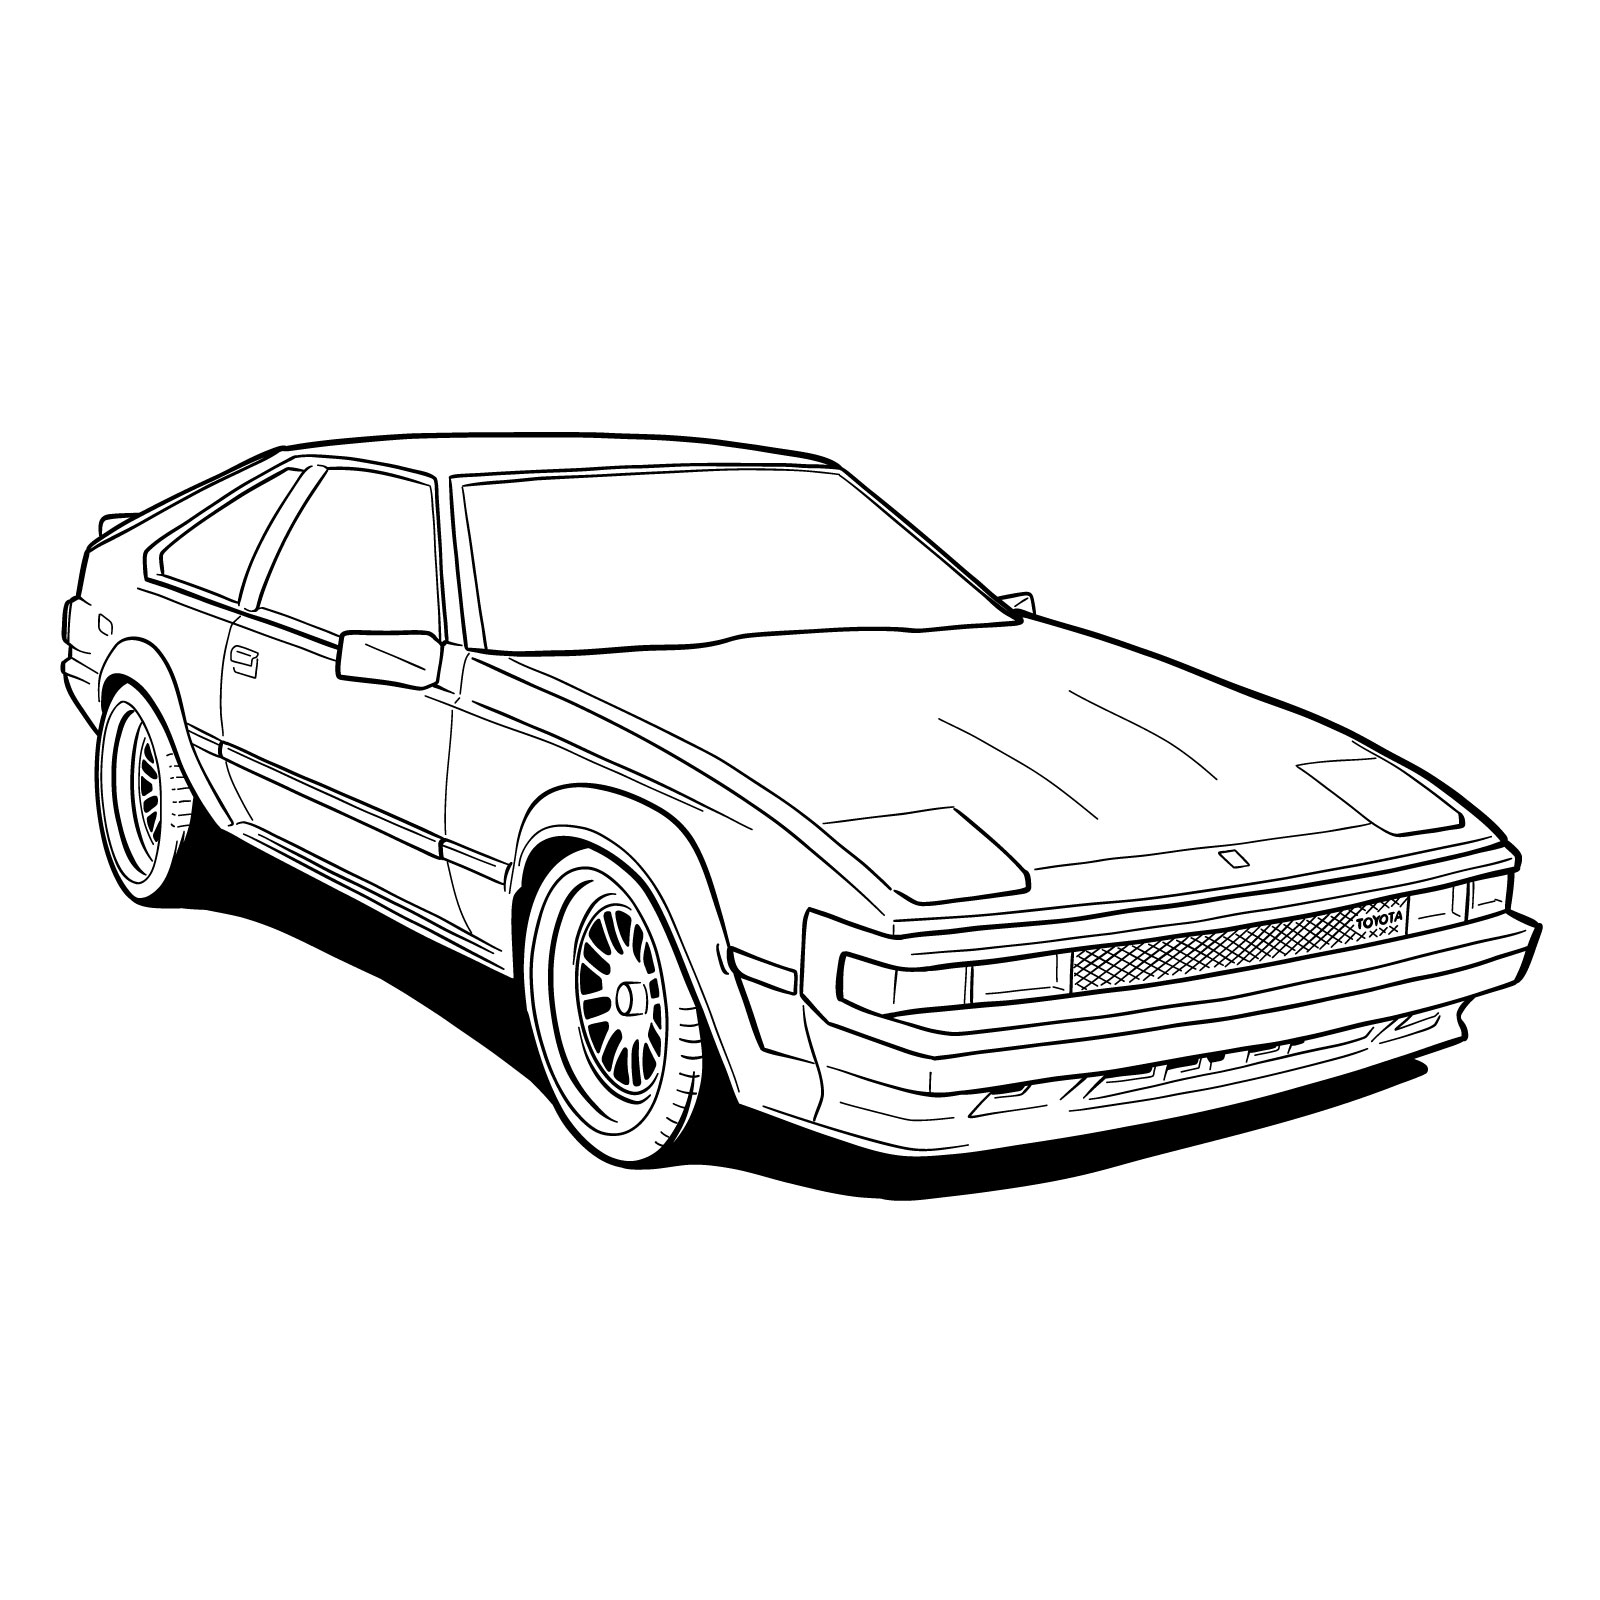 How to draw a 1985 Toyota Celica Supra P Type MK 2 - final step